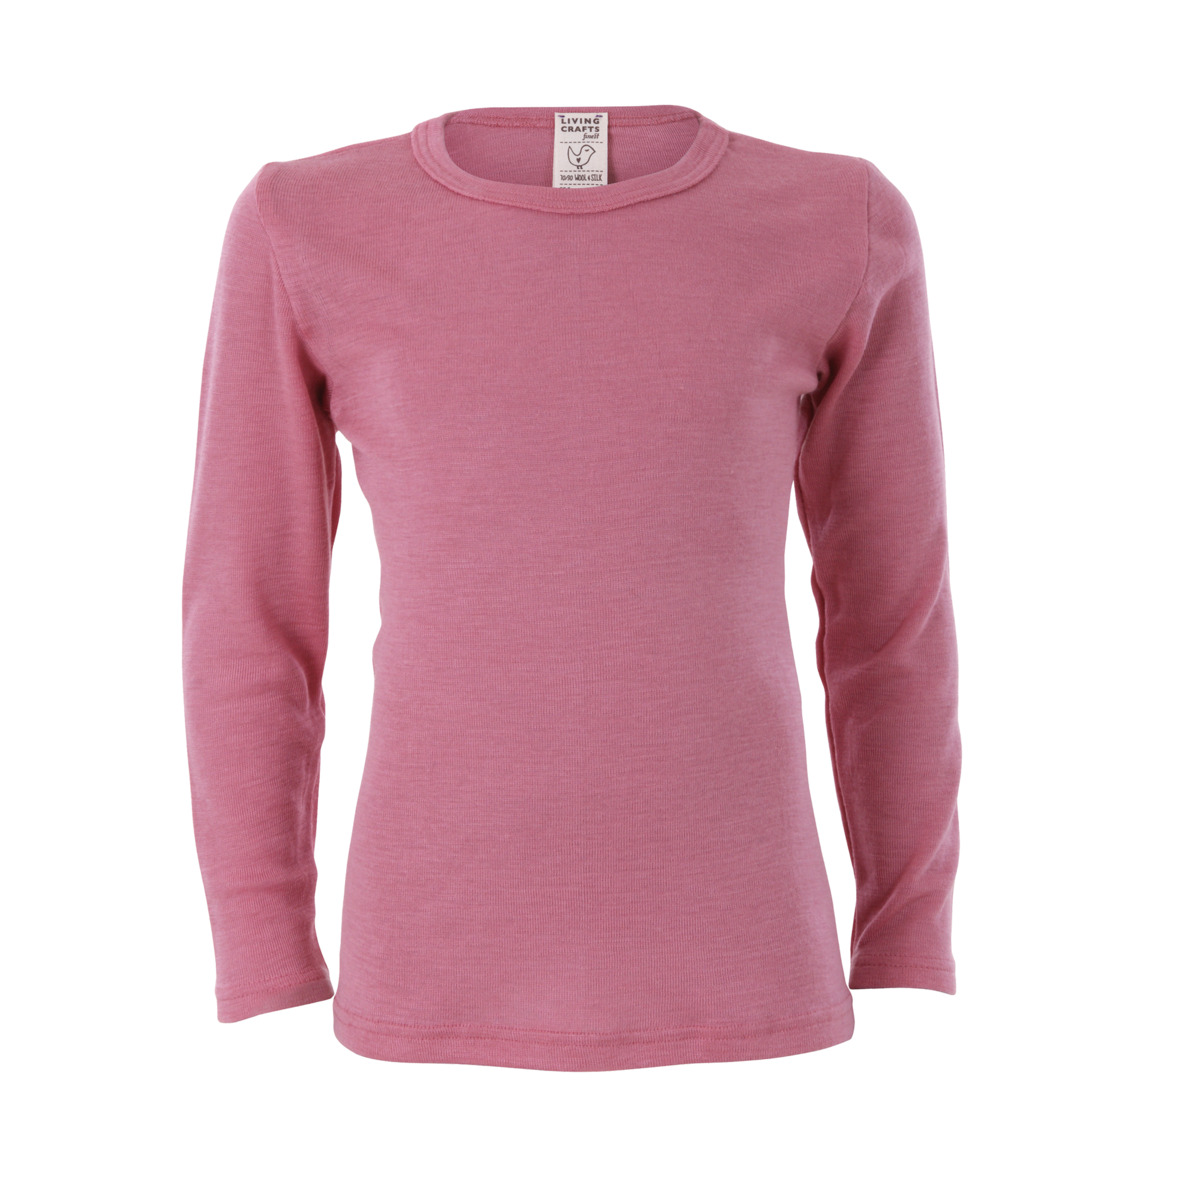 Pink Long-sleeved shirt, 